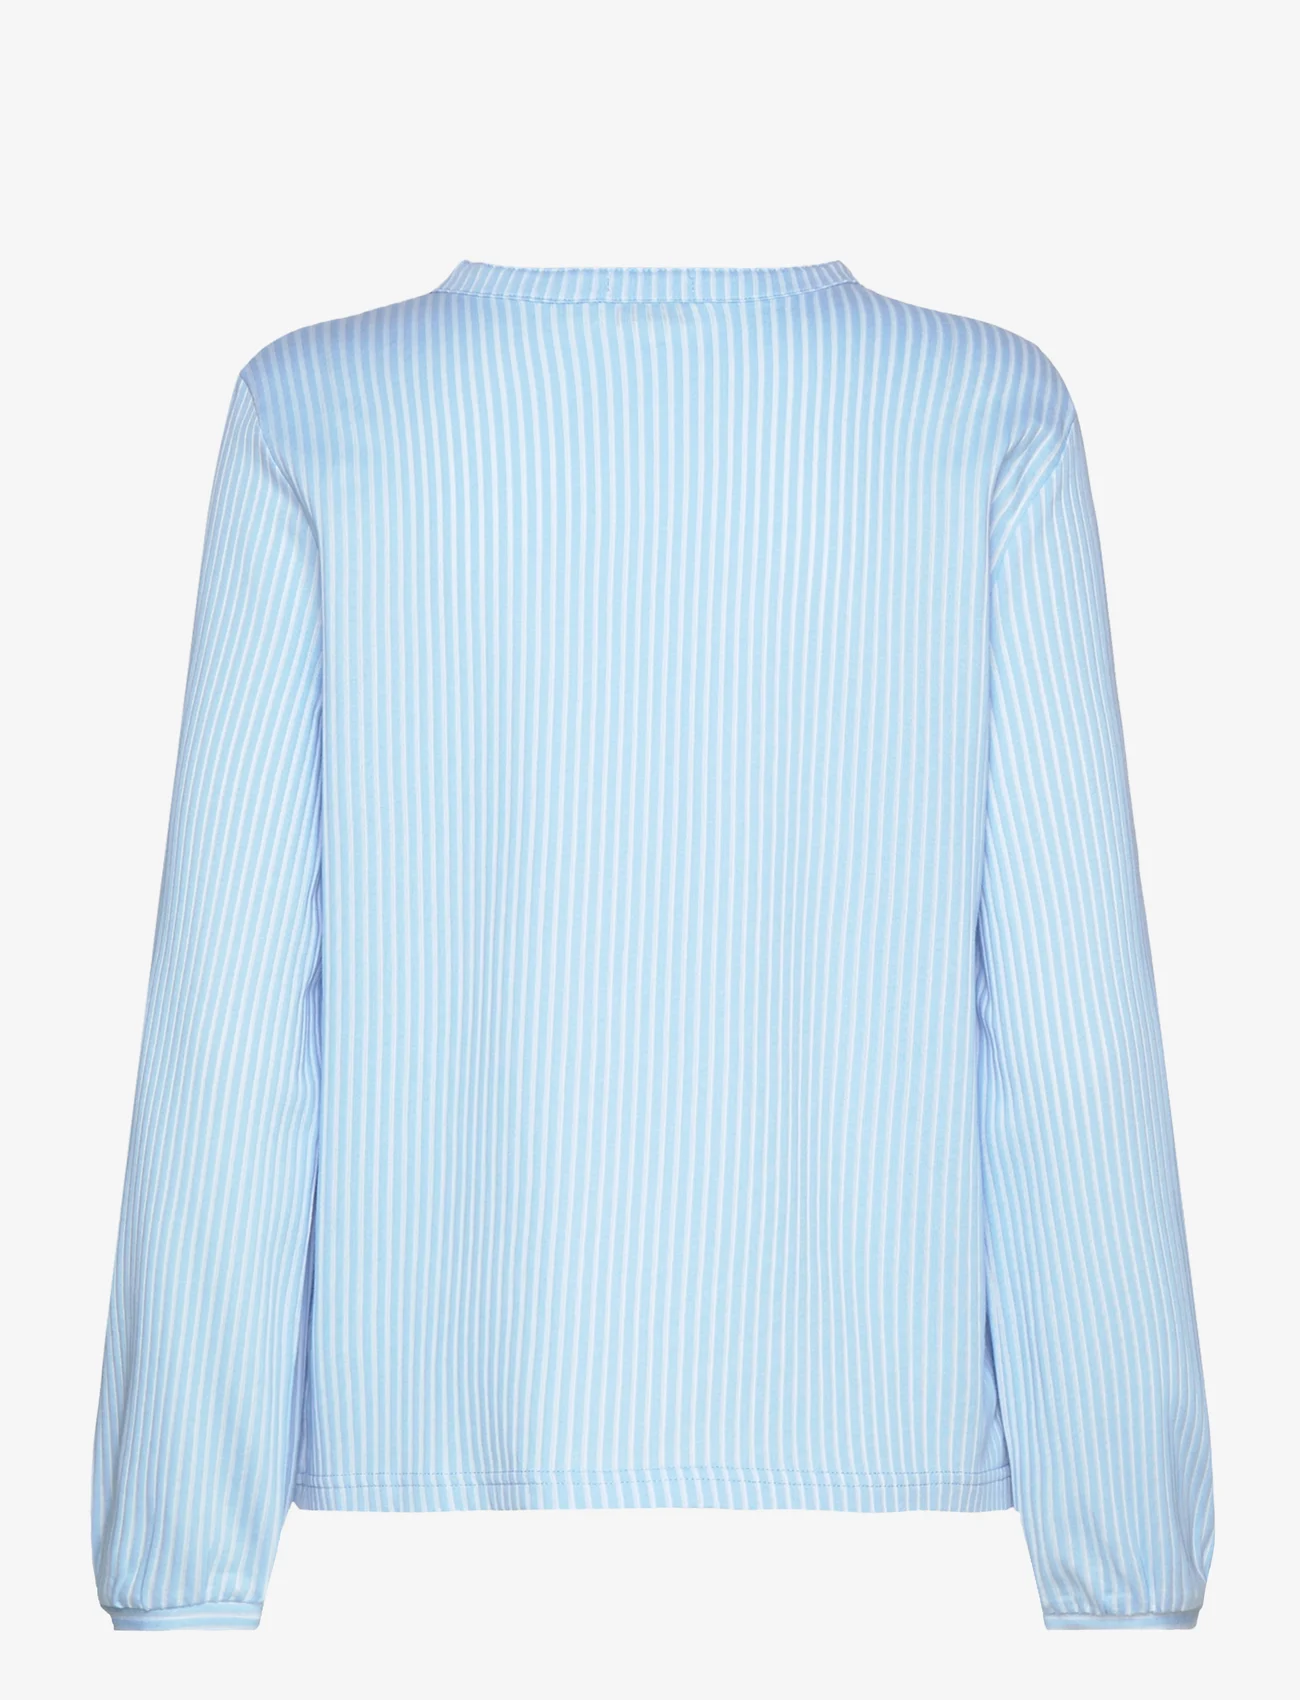 Tom Tailor - T-shirt blouse vertical stripe - blūzes ar garām piedurknēm - blue white thin stripe - 1